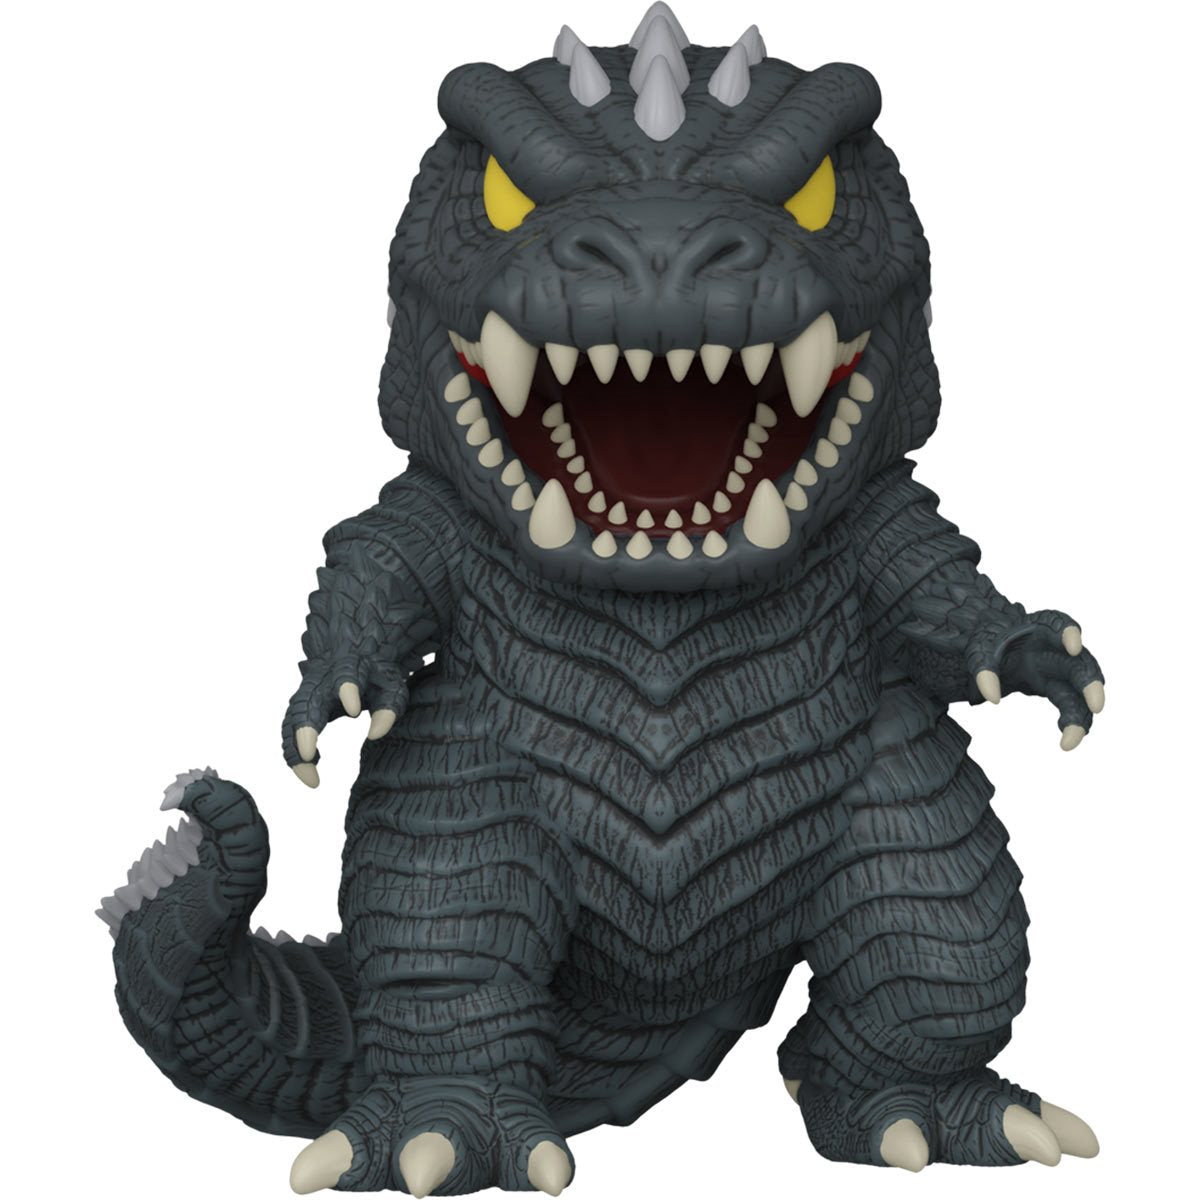 Godzilla Singular Point Godzilla Ultima Pop! + Premium Protector!